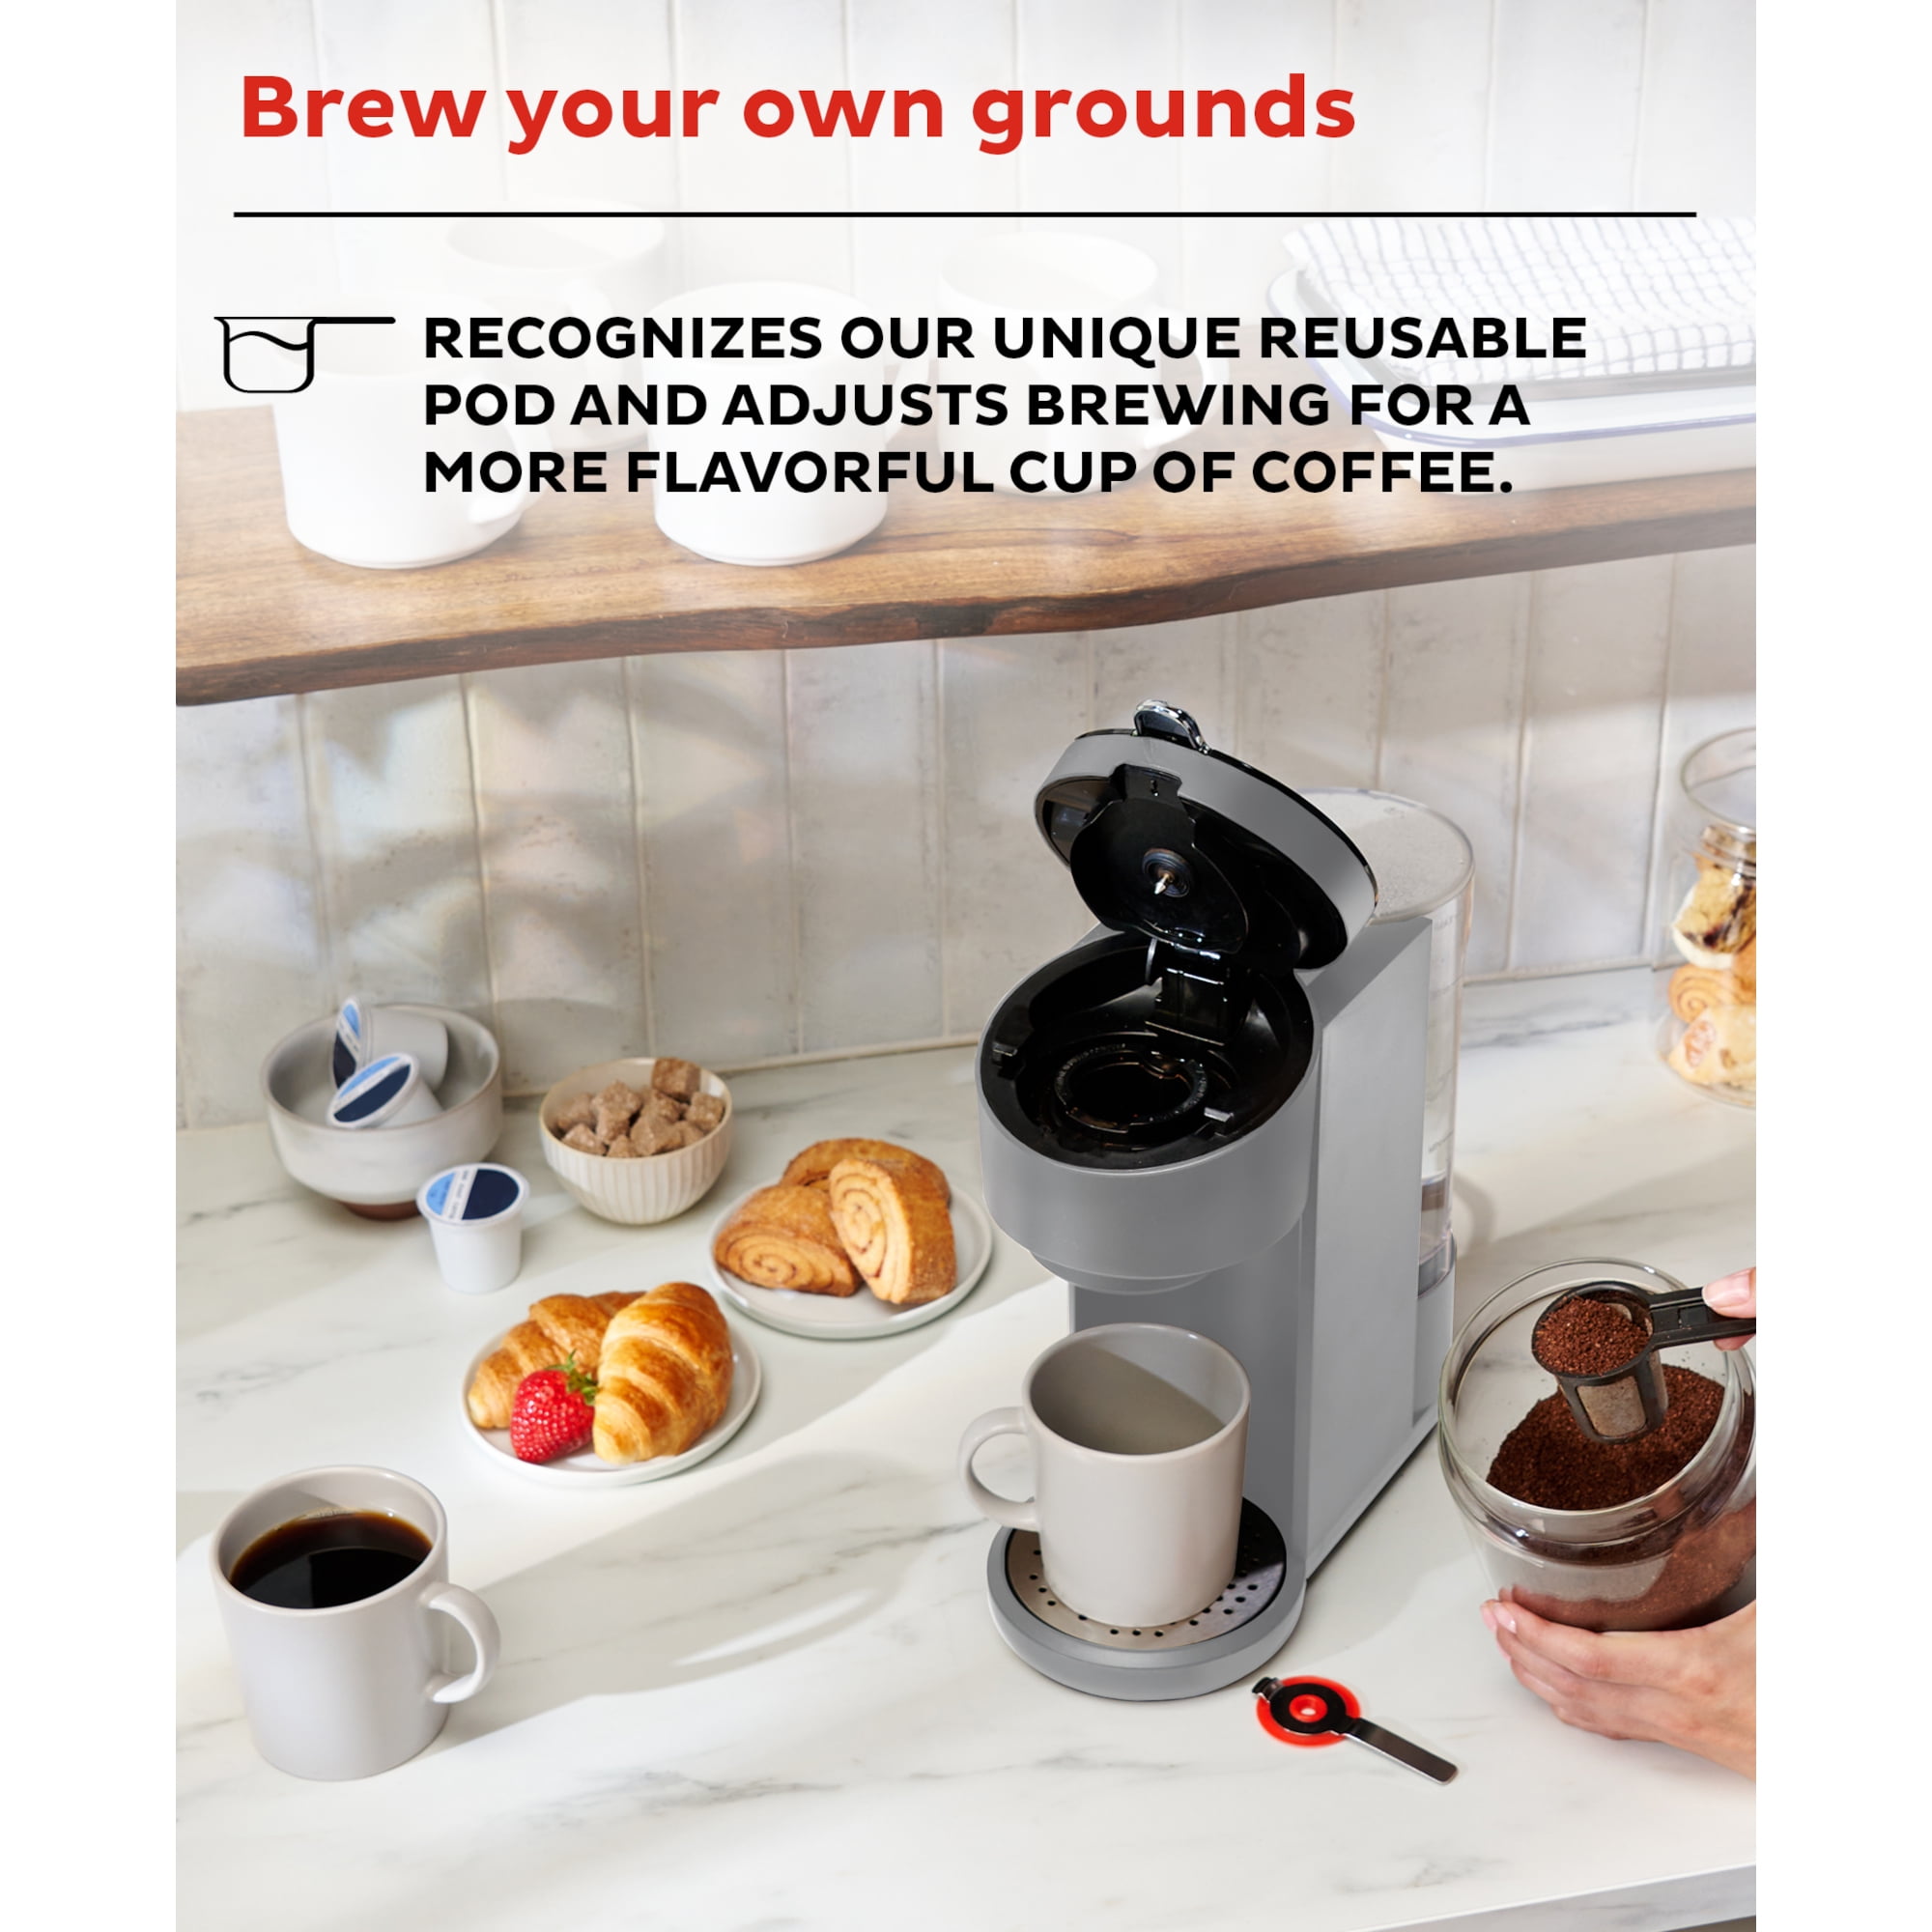 Instant Pod 2-in-1 Coffee and Espresso Maker 2 in 1 Single Brew for K-Cup  Pod 810028580824